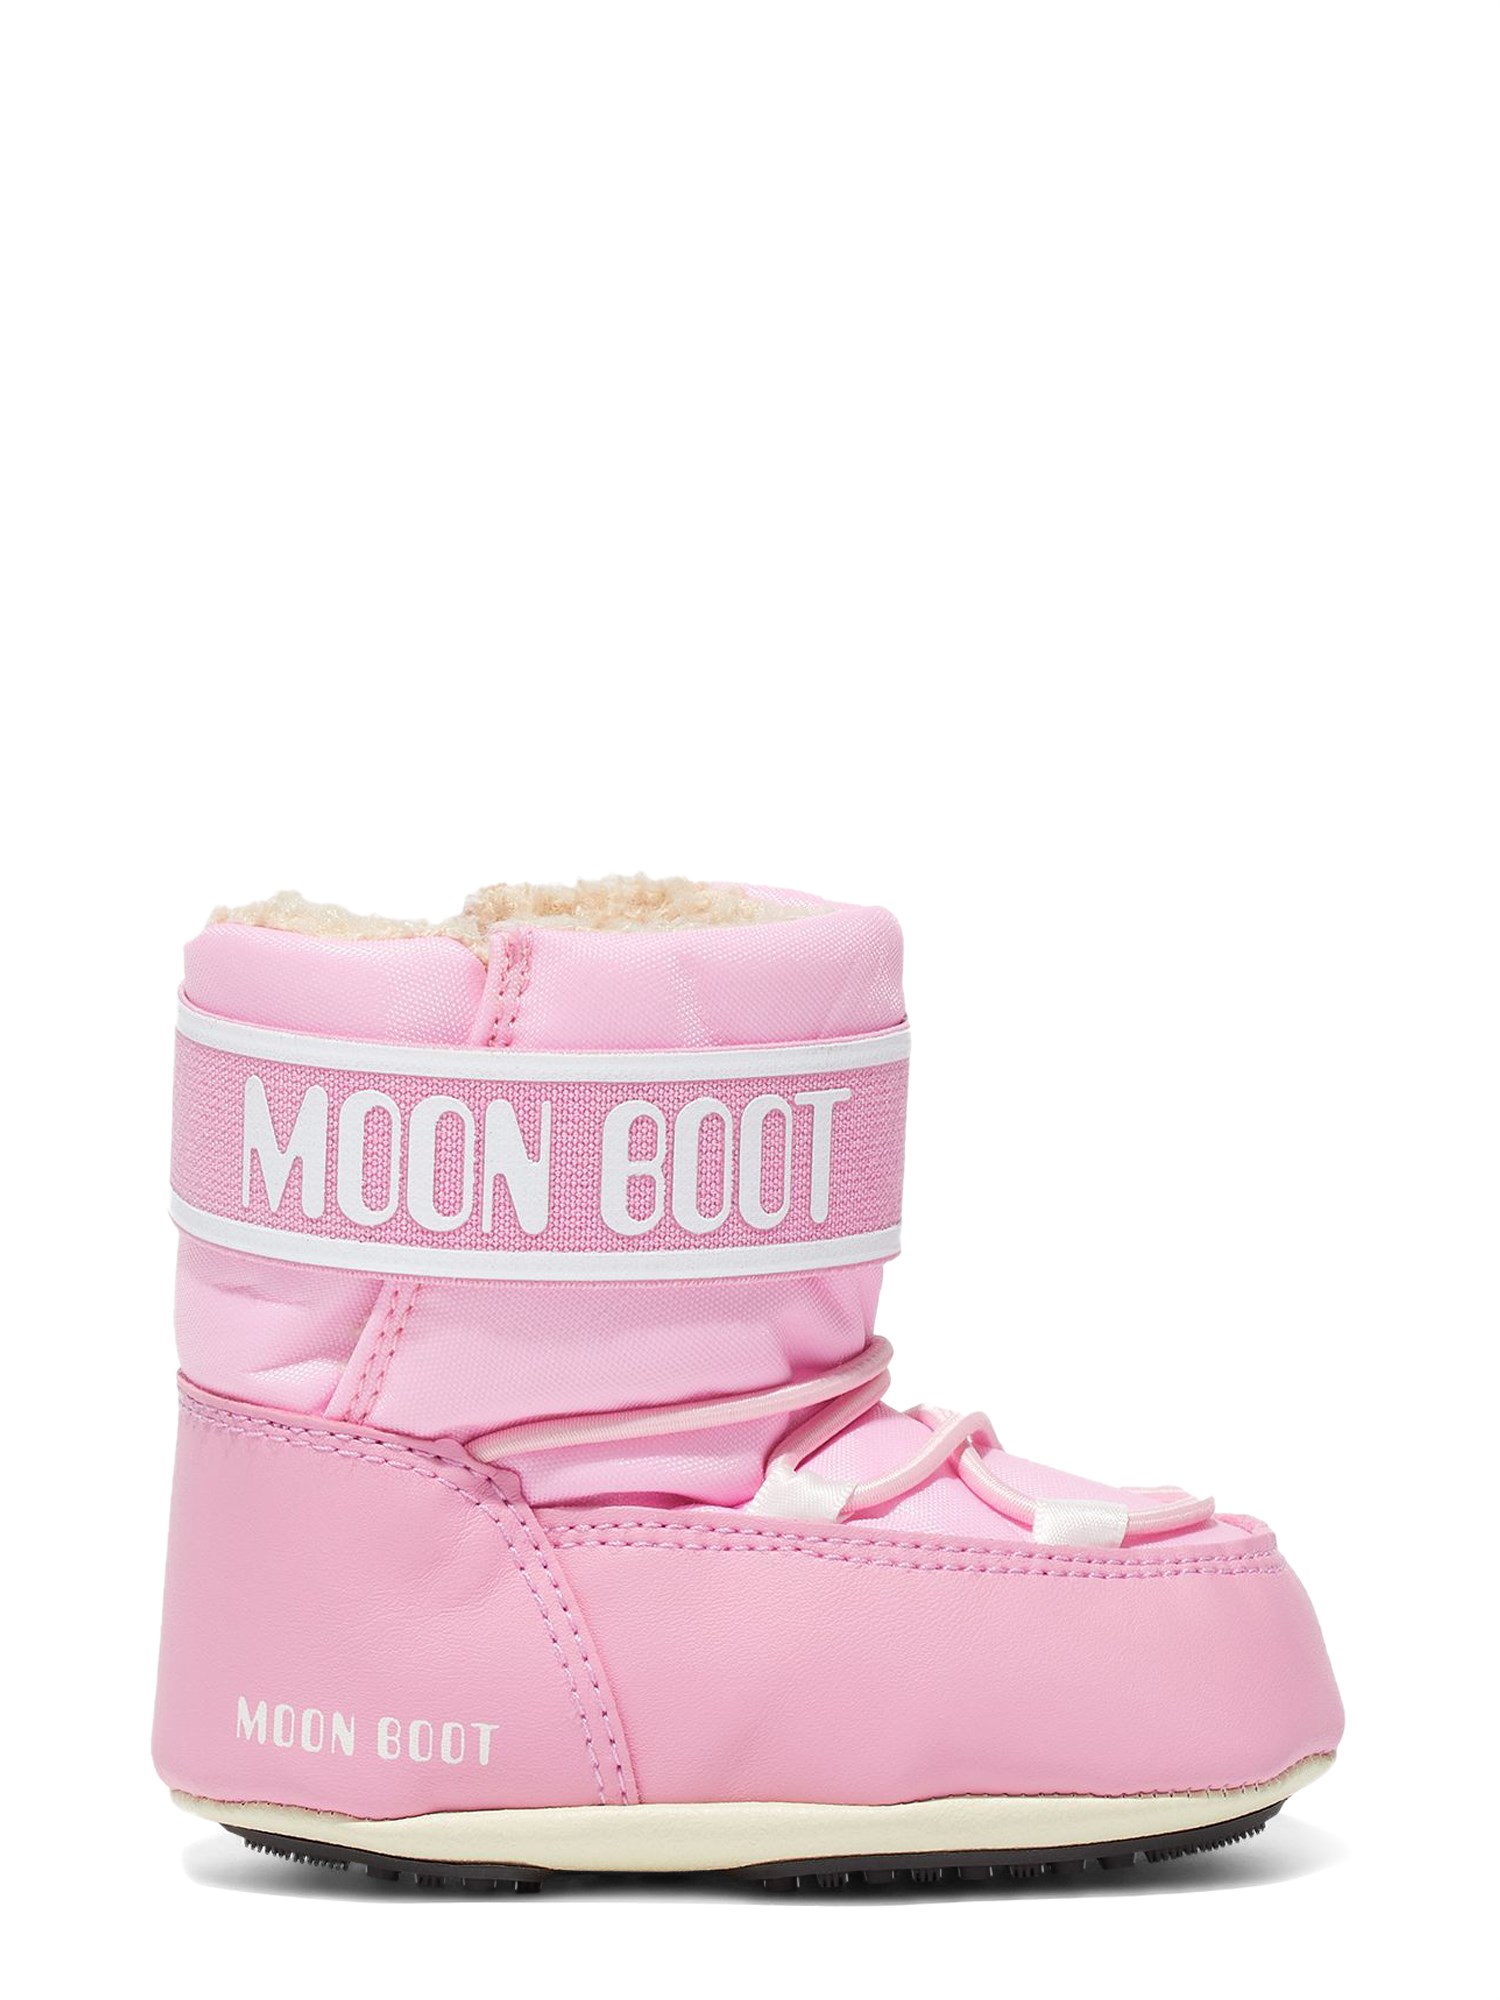 moon boot crib nylon